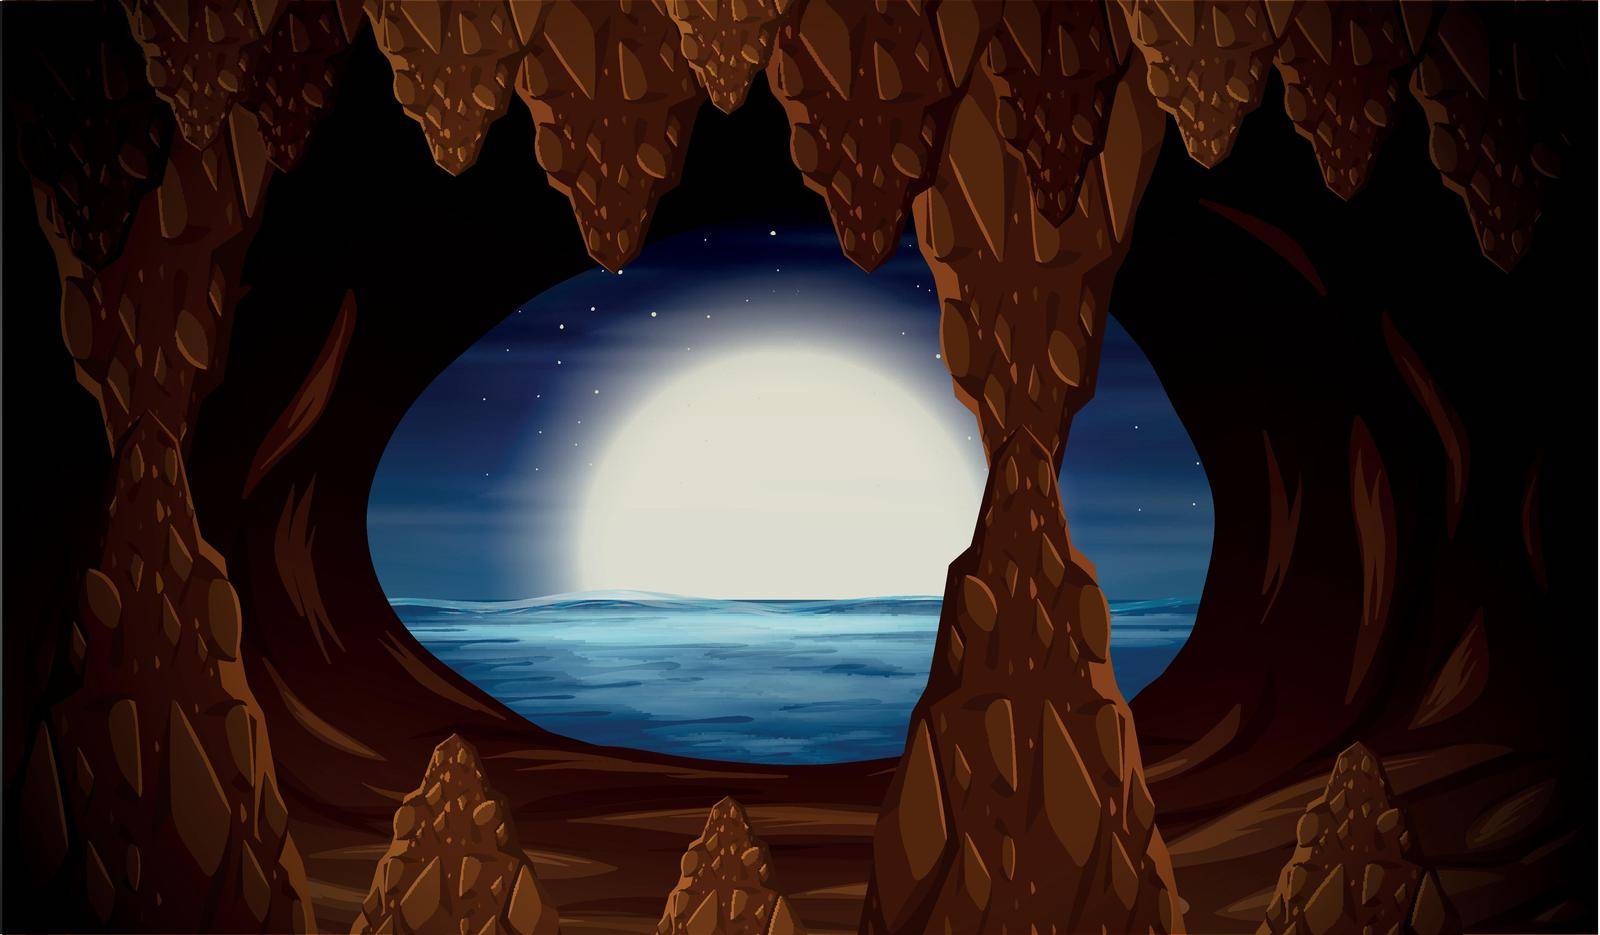 Cavern with ocean entrance illustration